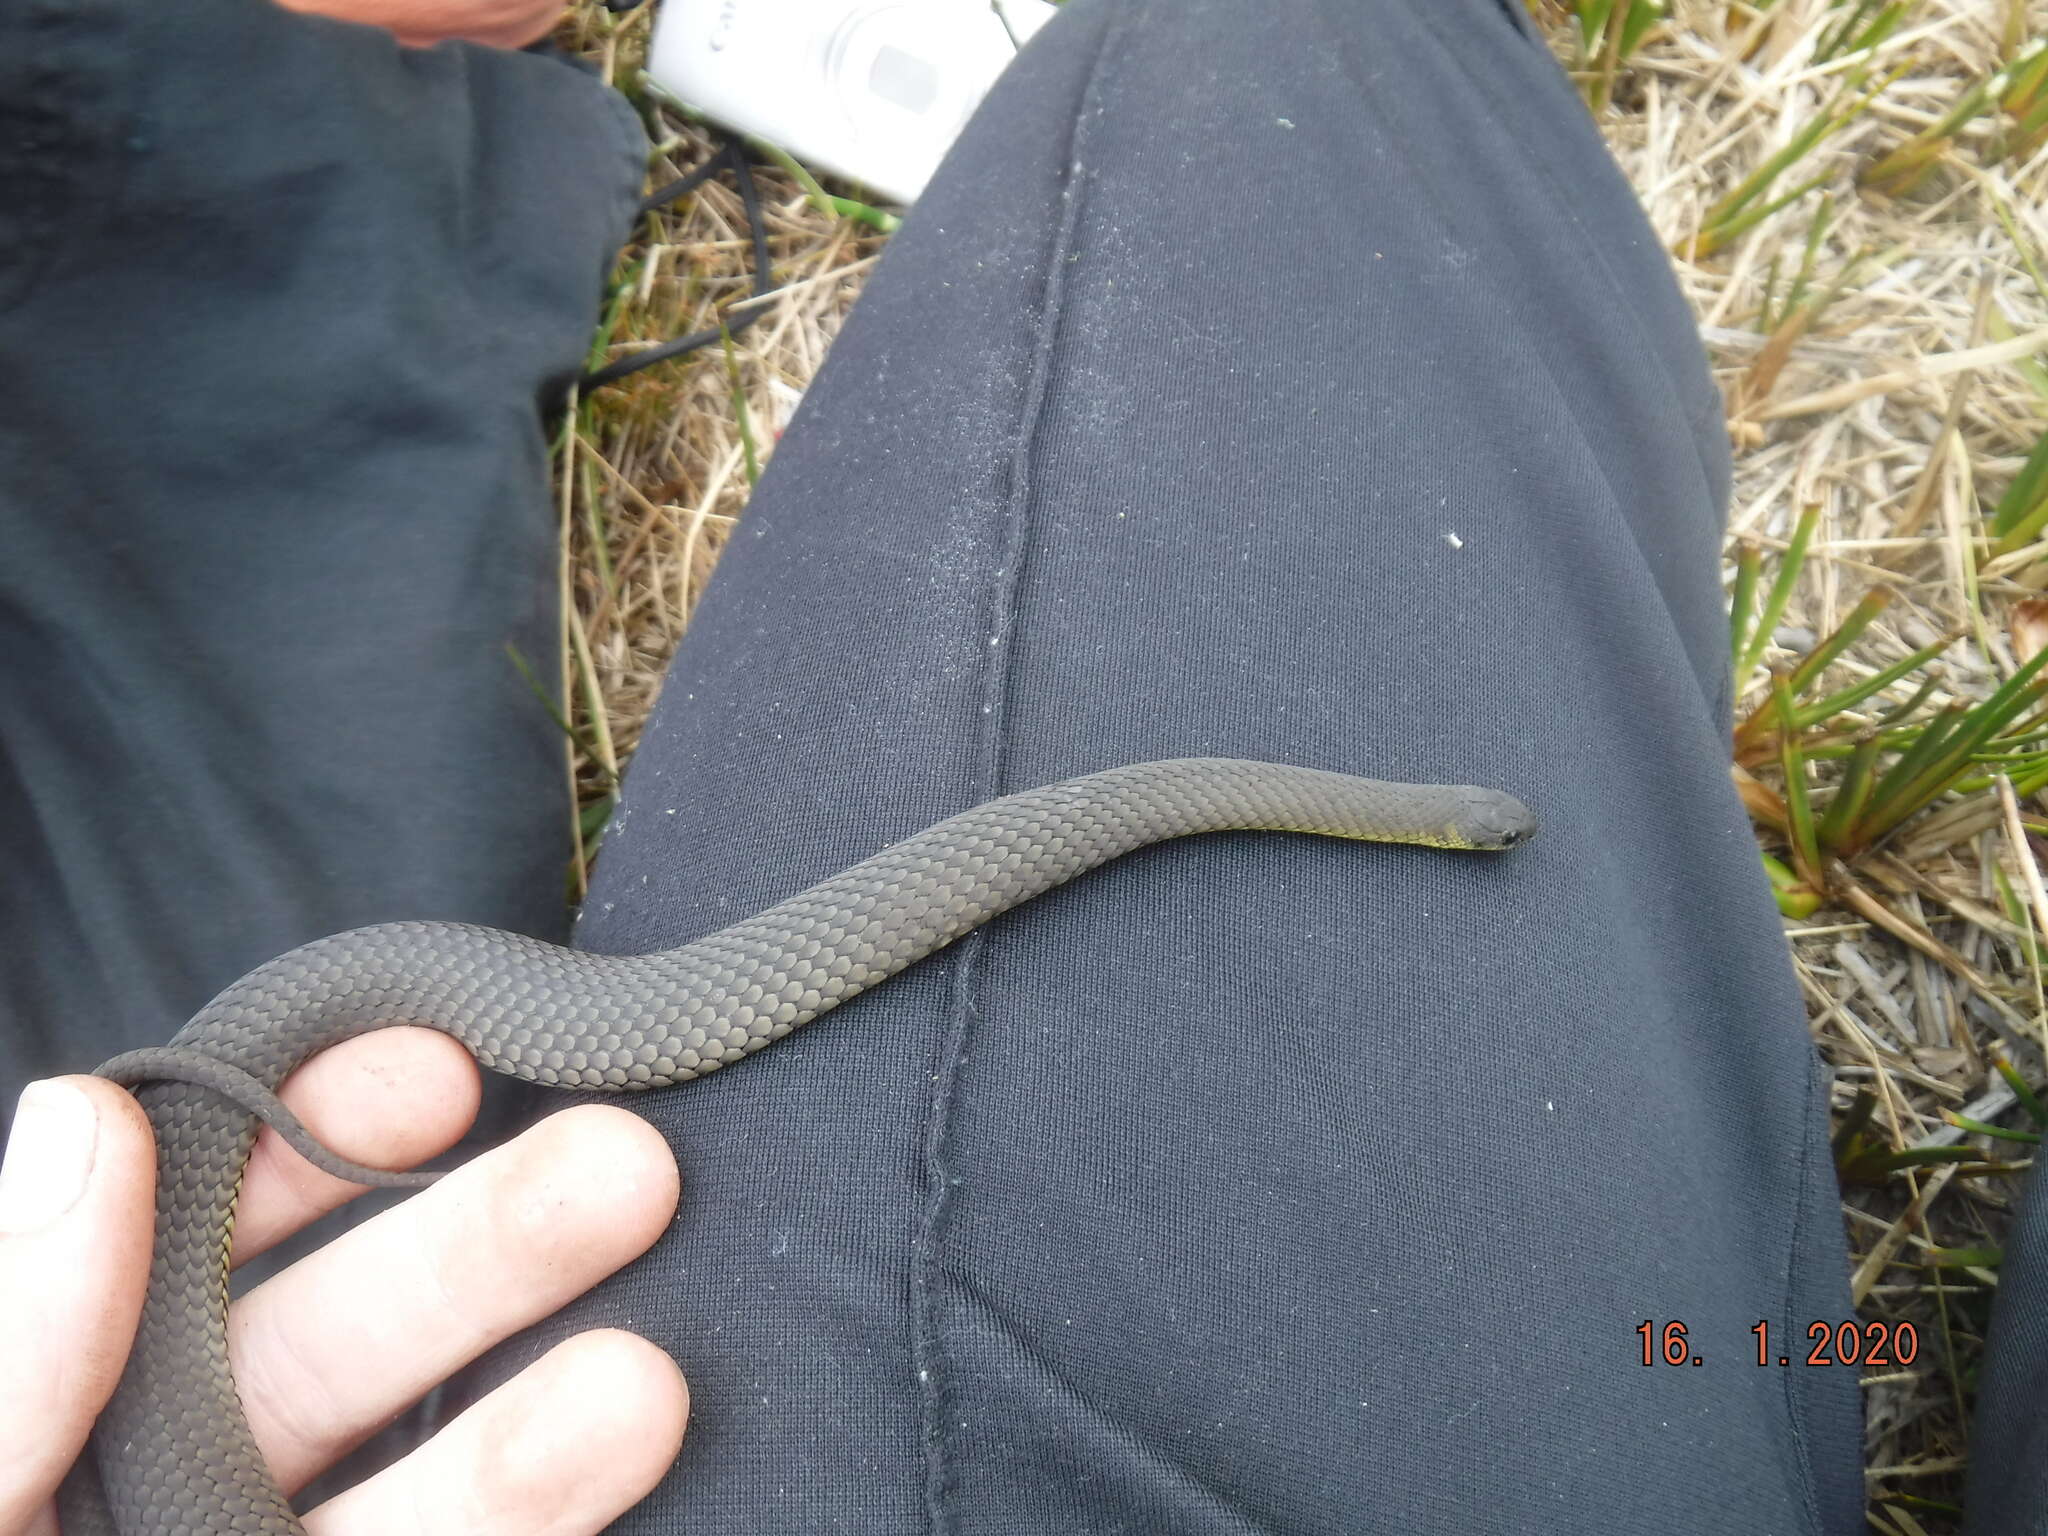 Image of Little Brown Snake